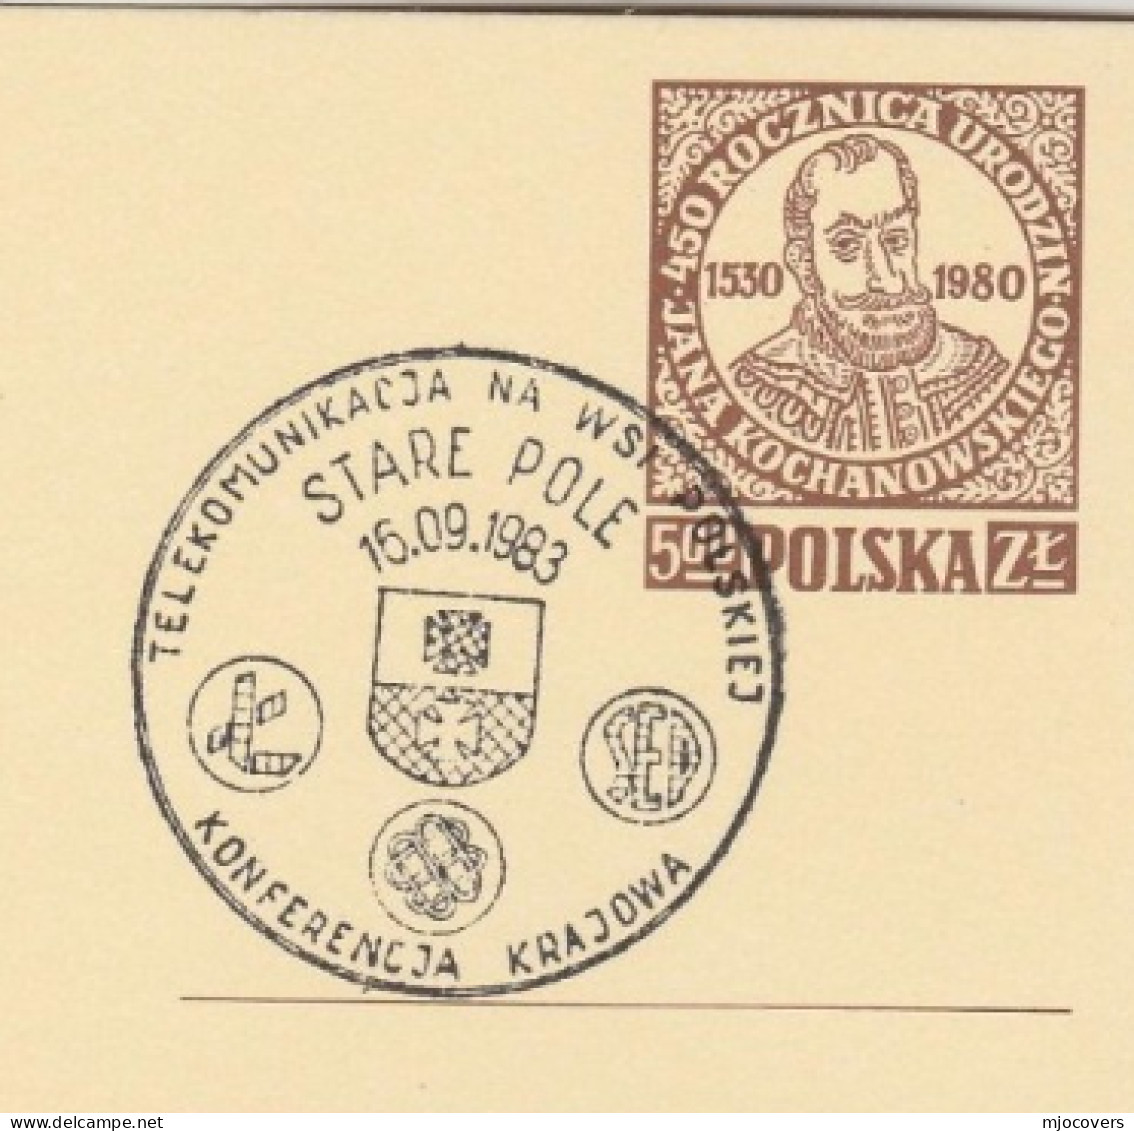 1983 TELECOM In COUNTRYSIDE CONFERENCE Poland EVENT Cover POSTAL STATIONERY Card - Telecom